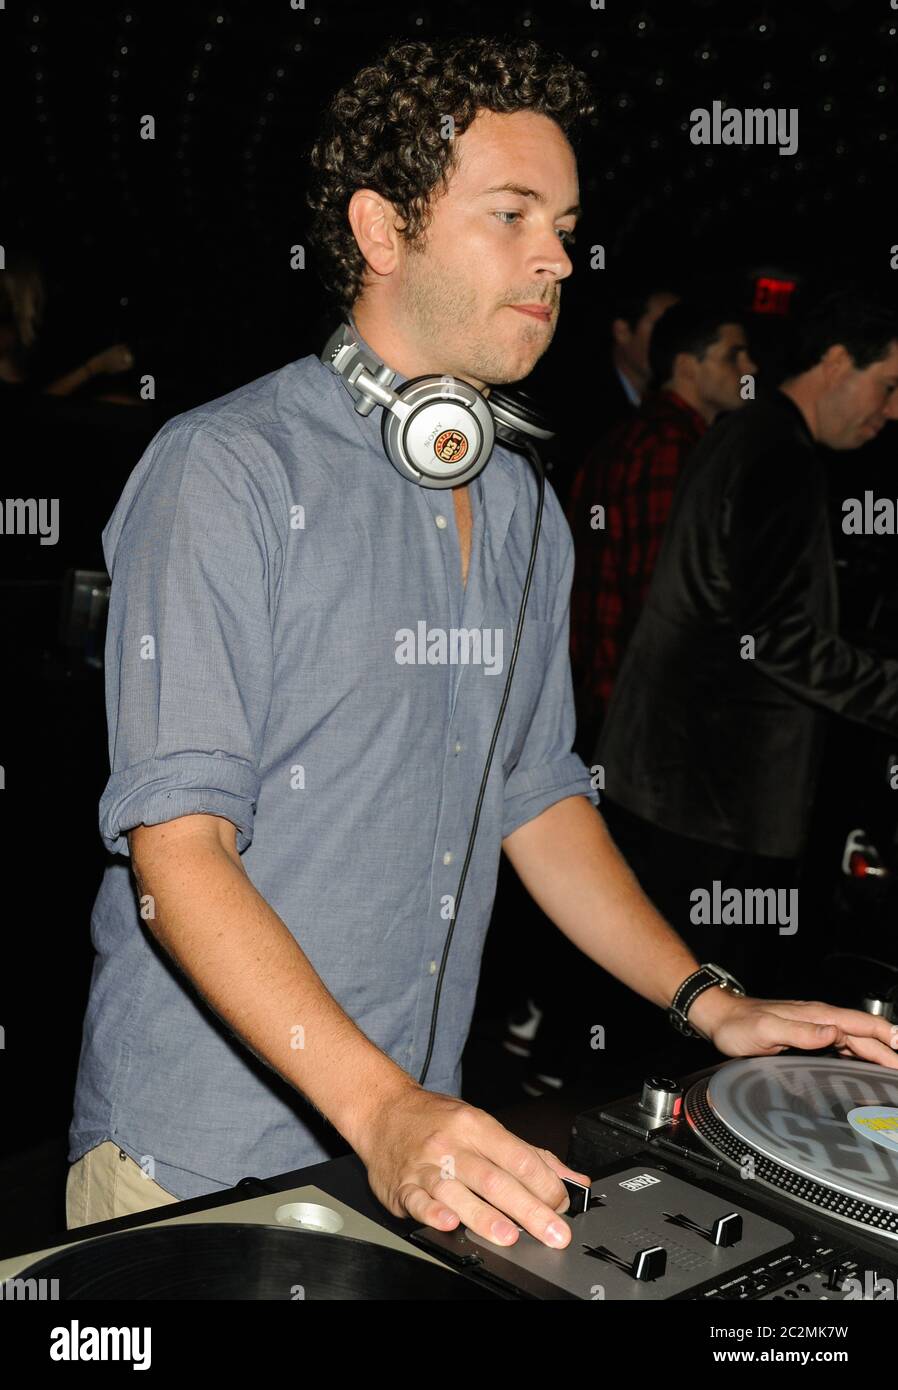 ATLANTIC CITY, NJ, USA - SEPTEMBER 25, 2010: Danny Masterson DJ's at Dusk Nightclub at Caesars Hotel Casino. Stock Photo